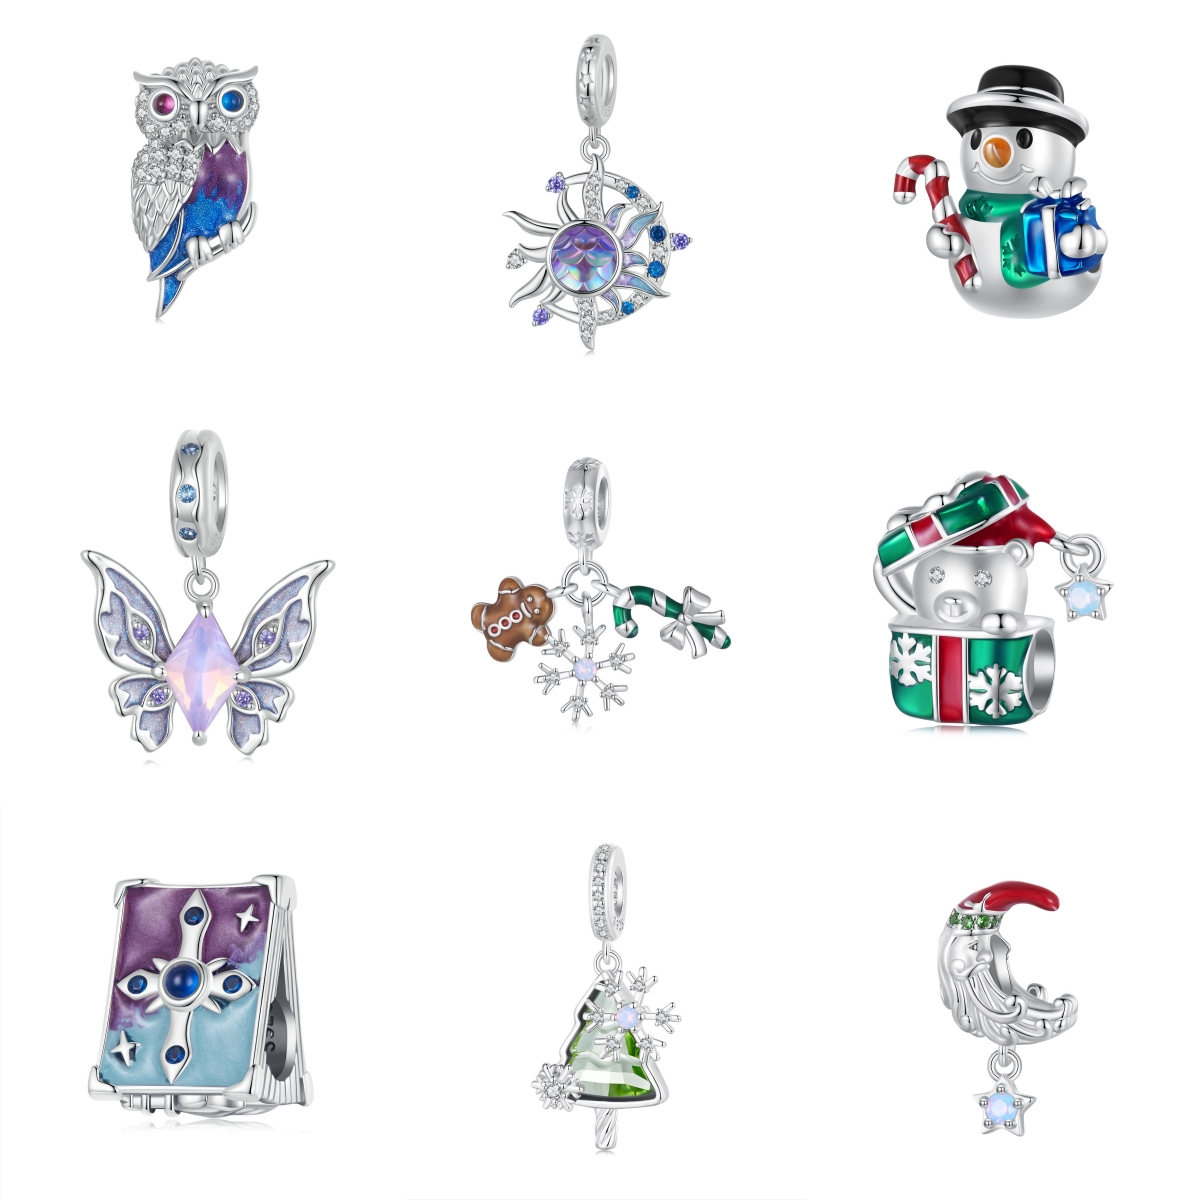 Fashion Jewelry Pendants&Charms.
Material:S925+Platinum Plated+Zirconia+Glass+Resin+Spinel+Nano opal+Enameling
Weight:1.6g-2.8g
MOQ:1
ETA:3-5days
Whatsapp:+8615274713082
Wechat:+8615274713082

#s925 #s925silver #s925sterlingsilver #sterling #sterlingsilver #sterlingsilverjewelry